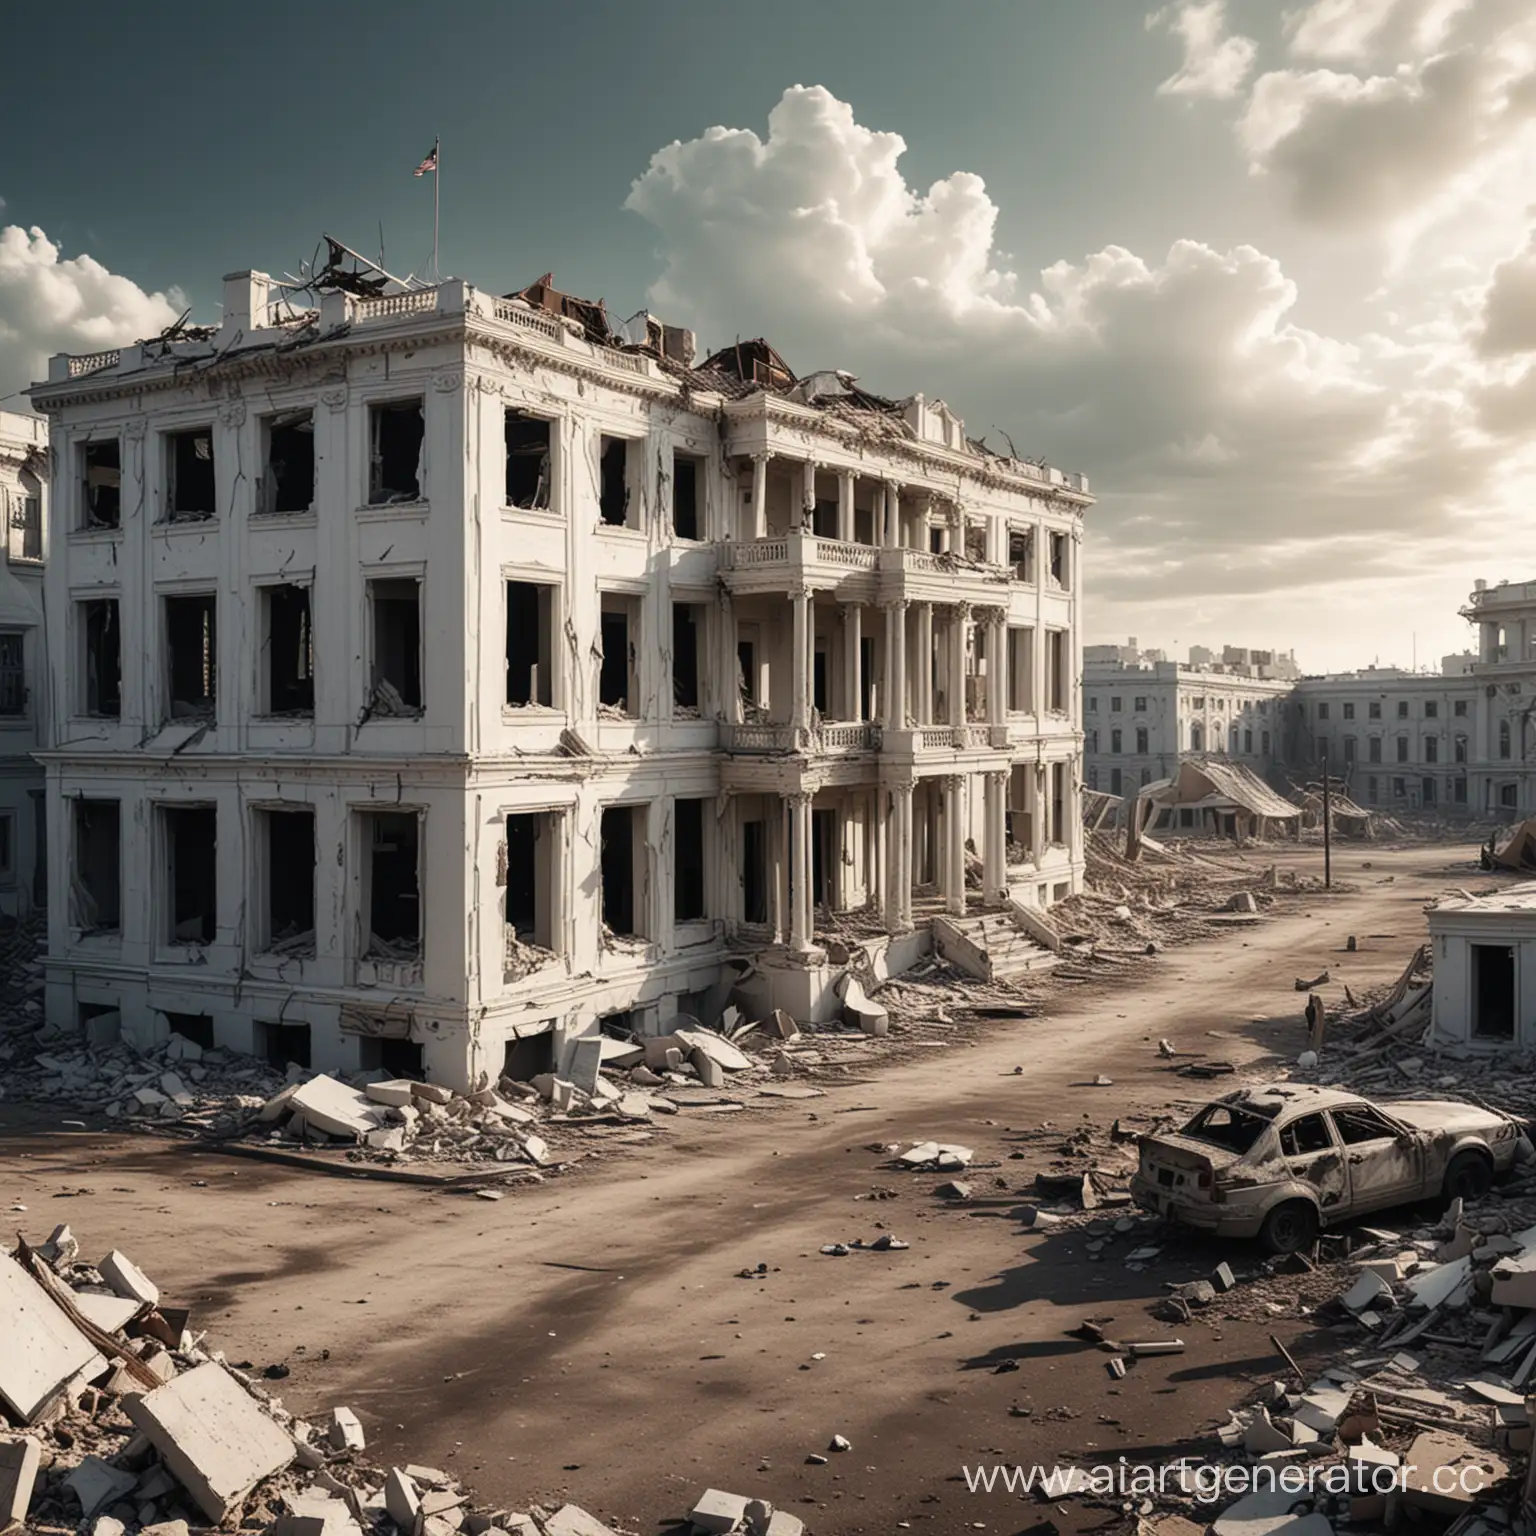 PostApocalyptic-Scene-Americas-White-House-Amidst-Urban-Devastation